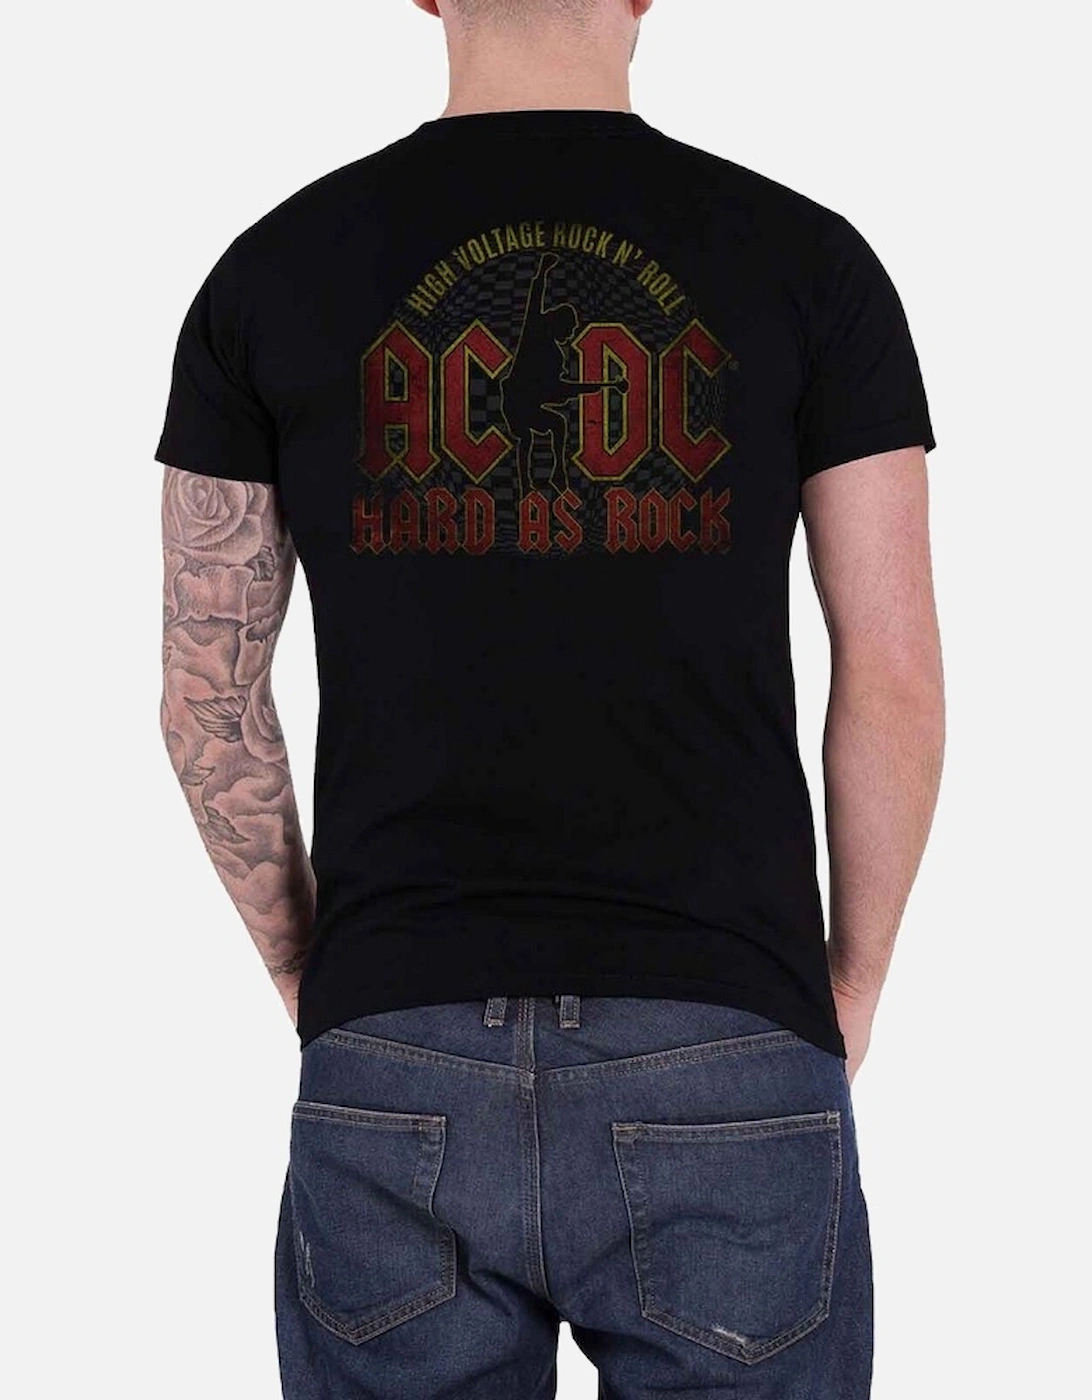 Unisex Adult Hard As Rock Back Print T-Shirt